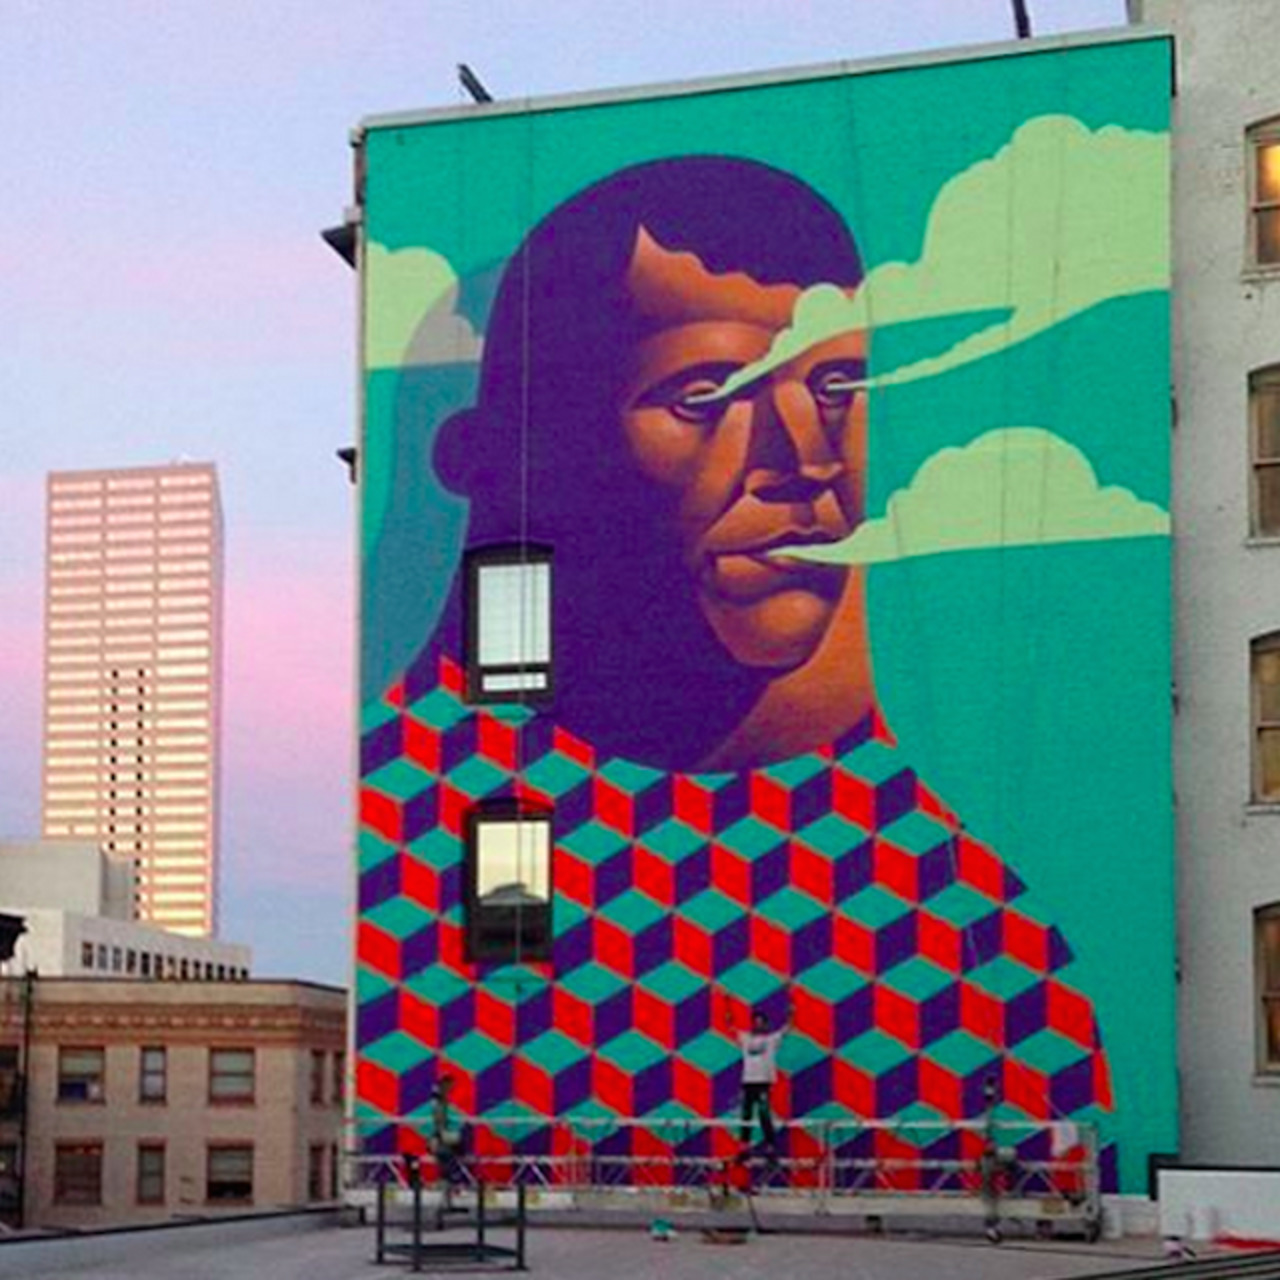 RT @allcitycanvas: Artist @reederone 's latest #mural in #Portland for @ffttnw ☁️ #streetart #graffiti #urbanart http://t.co/k3er27uWqi